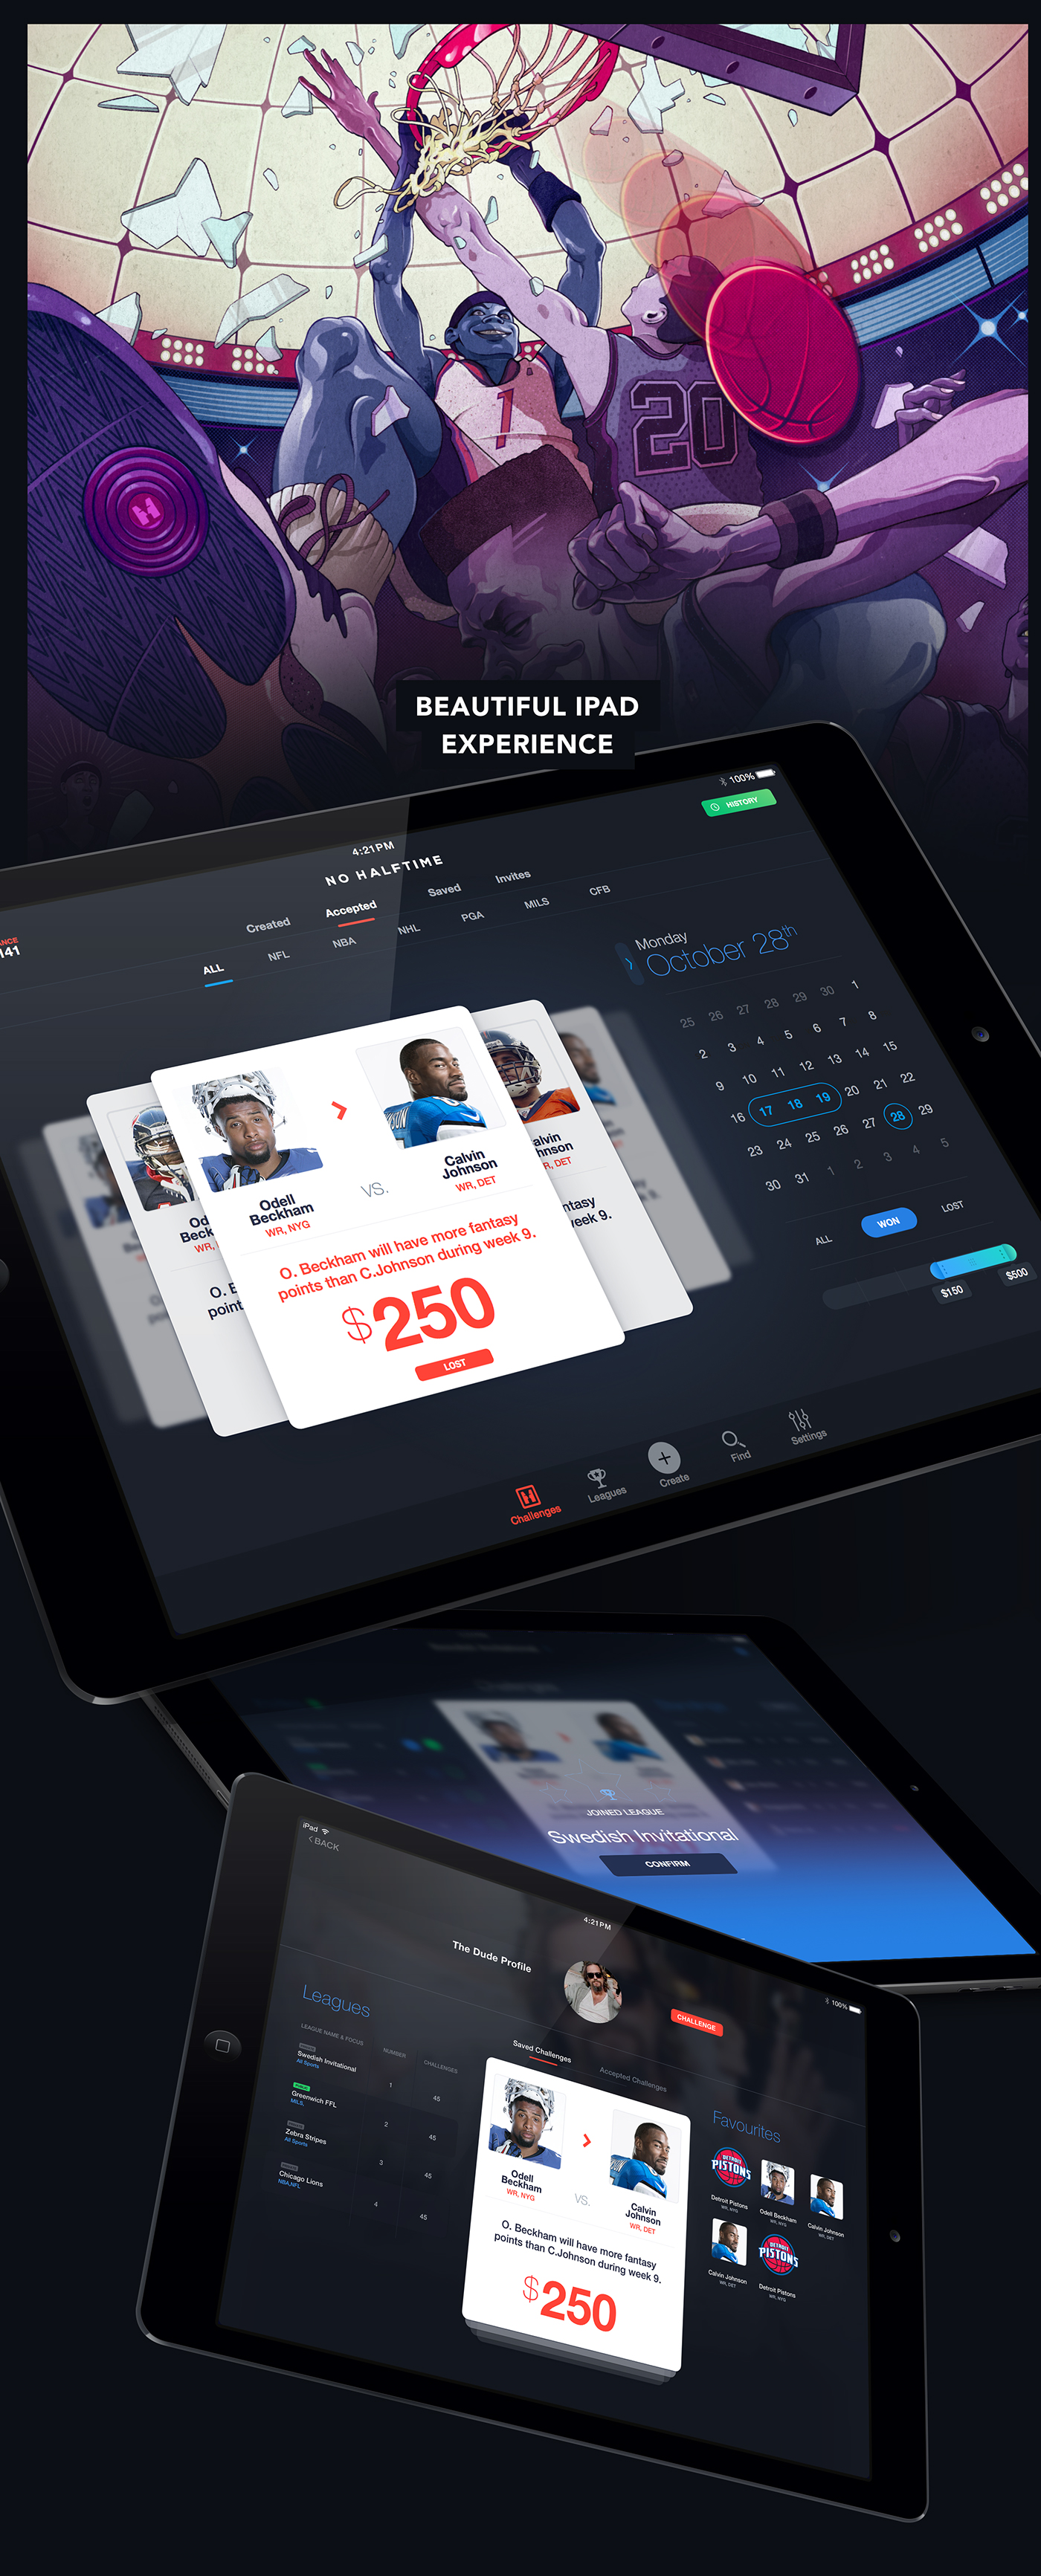 Adobe Portfolio app UI sport bet matchup fantasy sports cards samborek sambora no halftime interaction betting